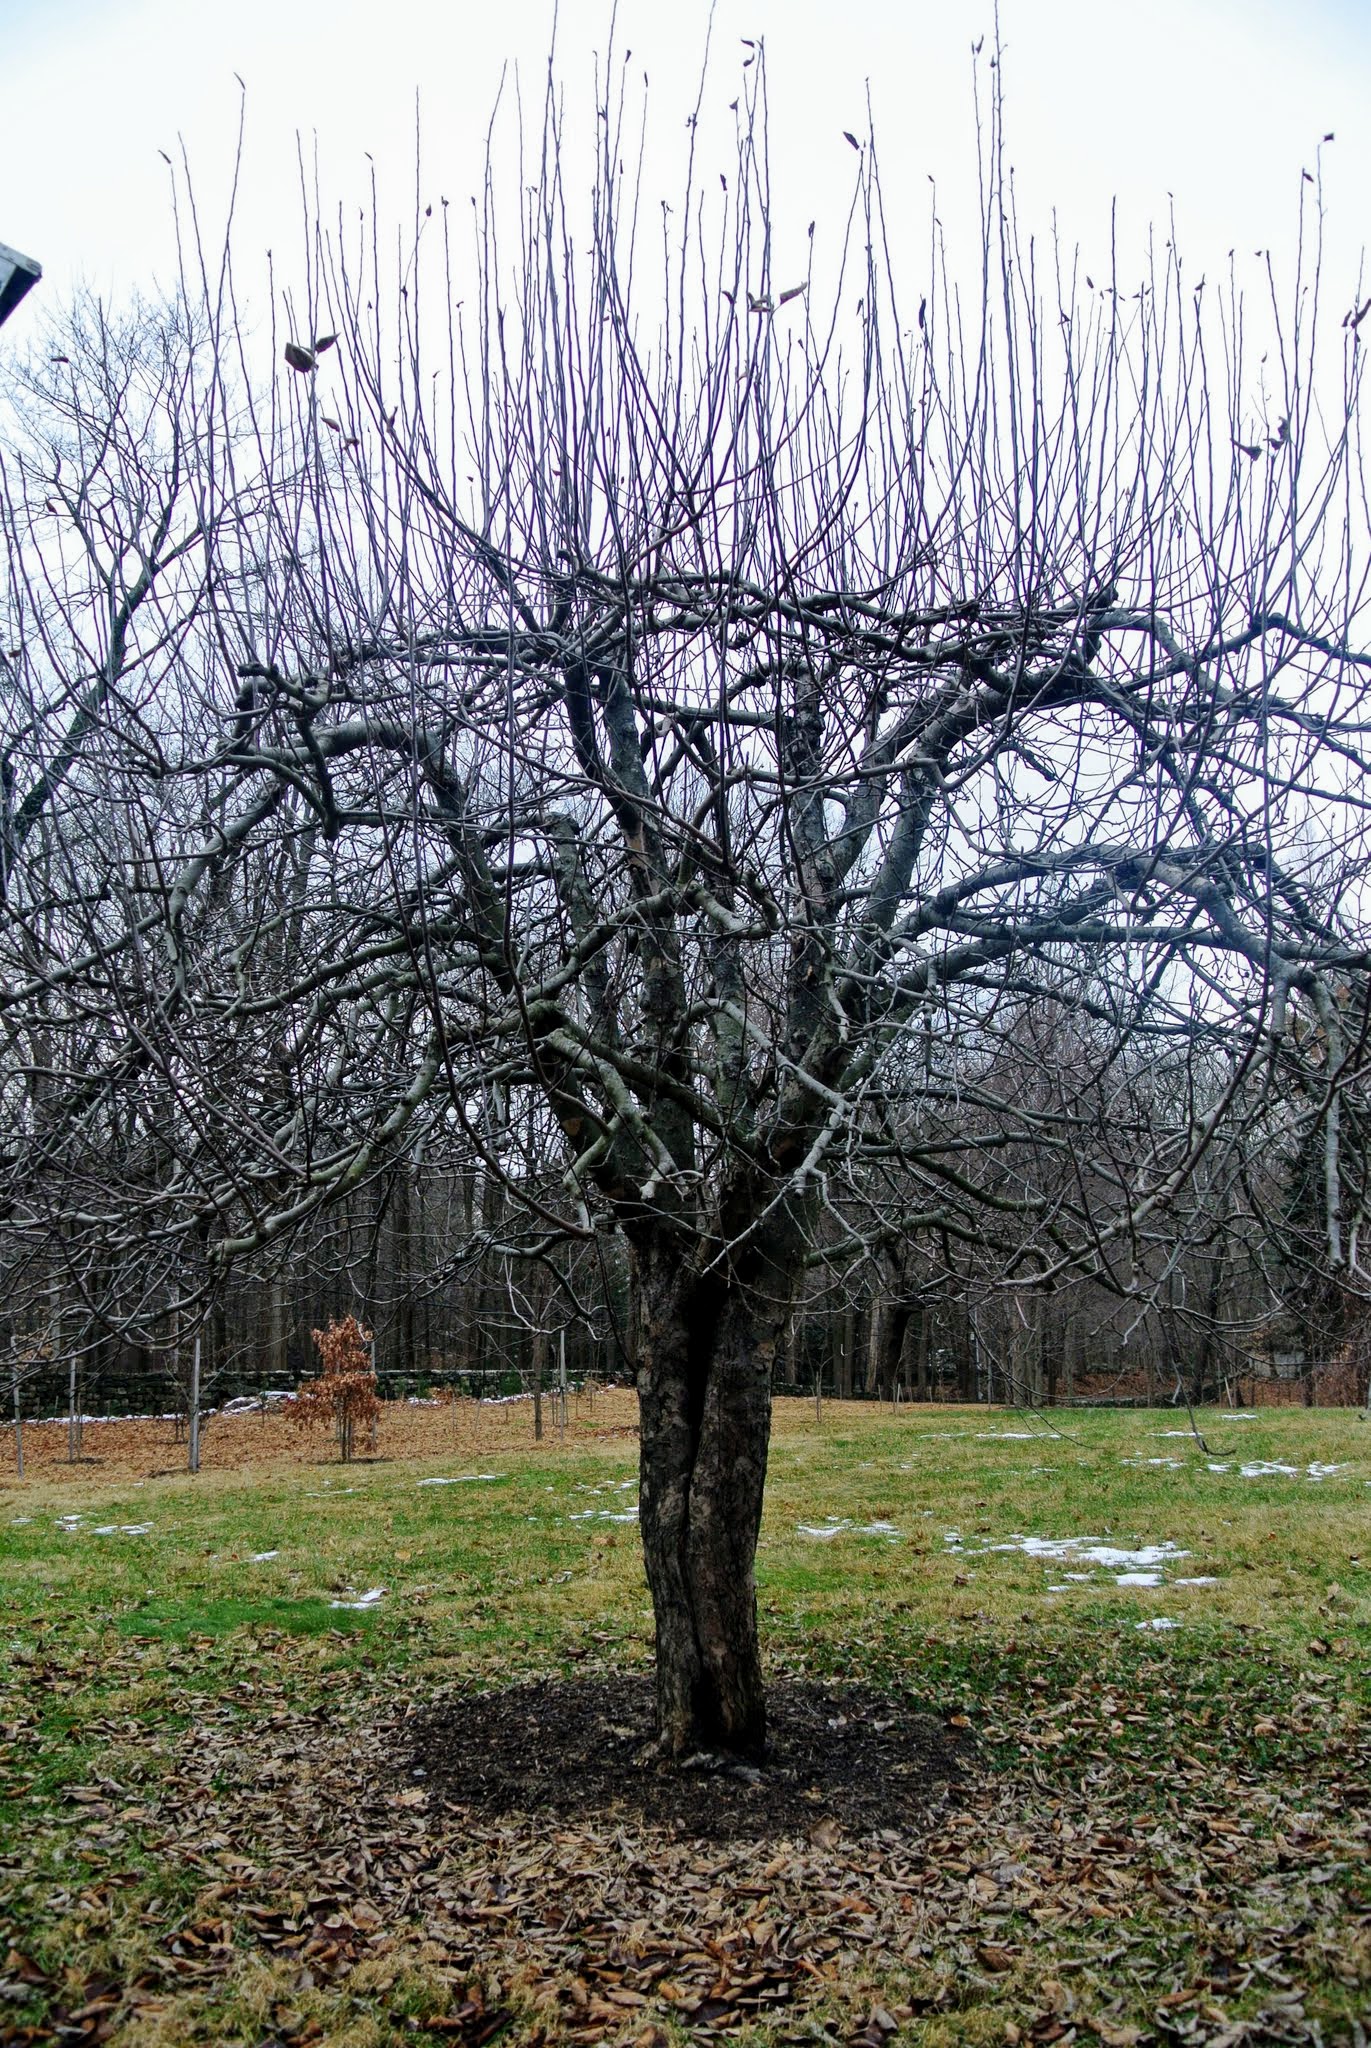 pruning apple trees download